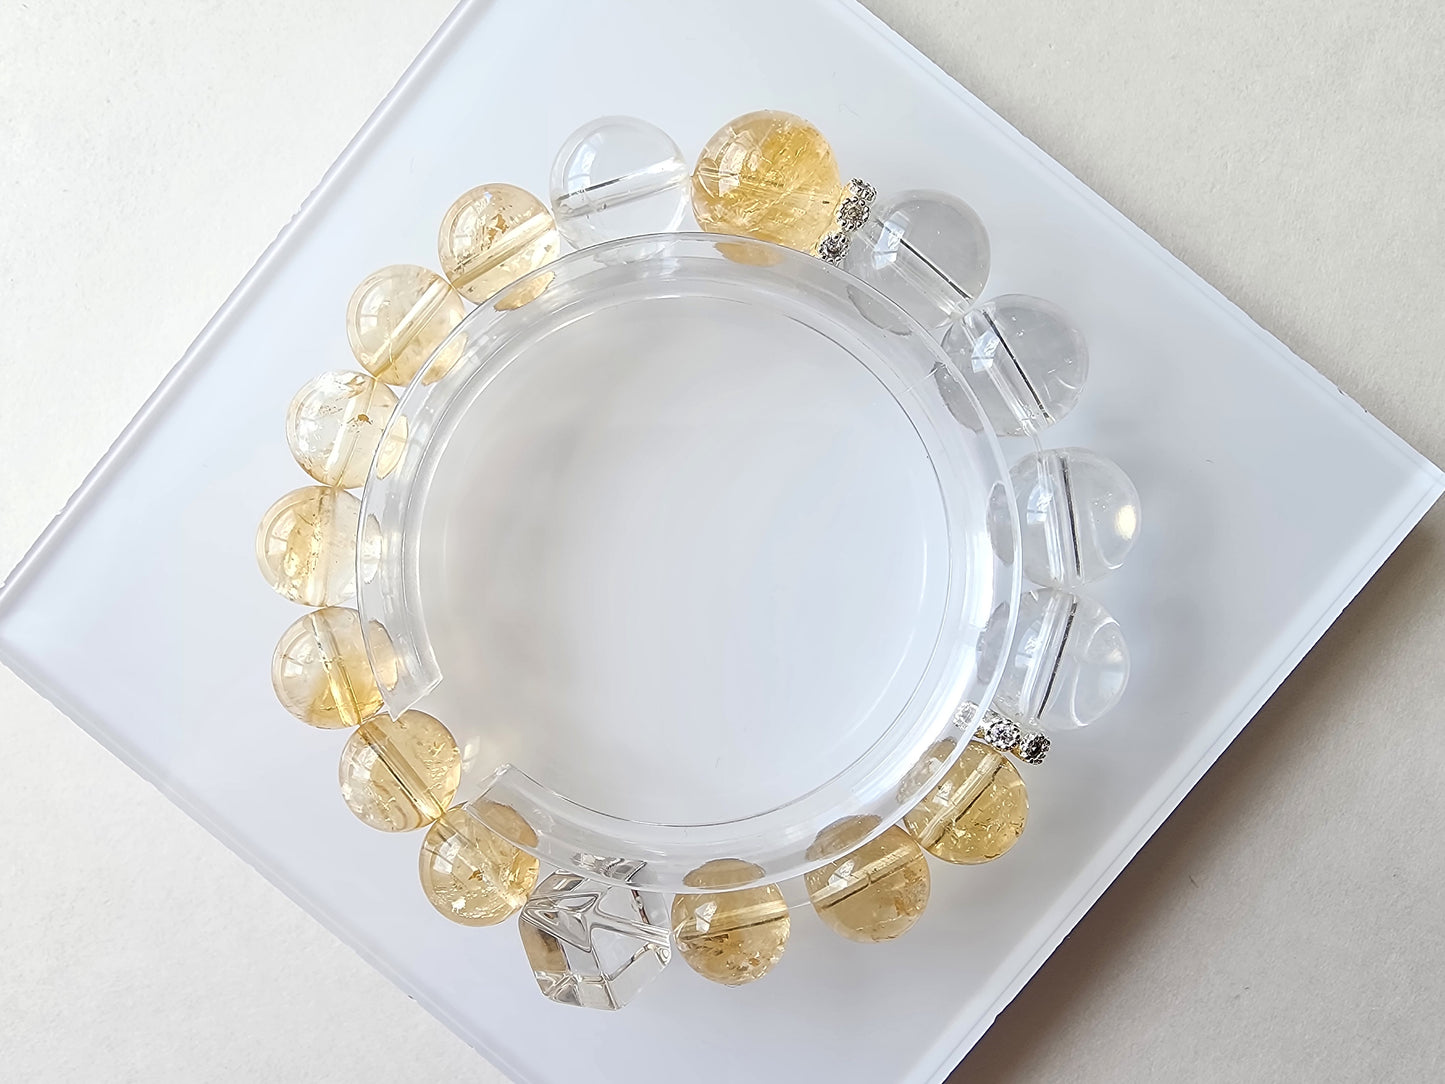 [Bracelet] 10mm Dual-Tone Yellow and Clear Quartz Bead Bracelet - Handcrafted Elegance